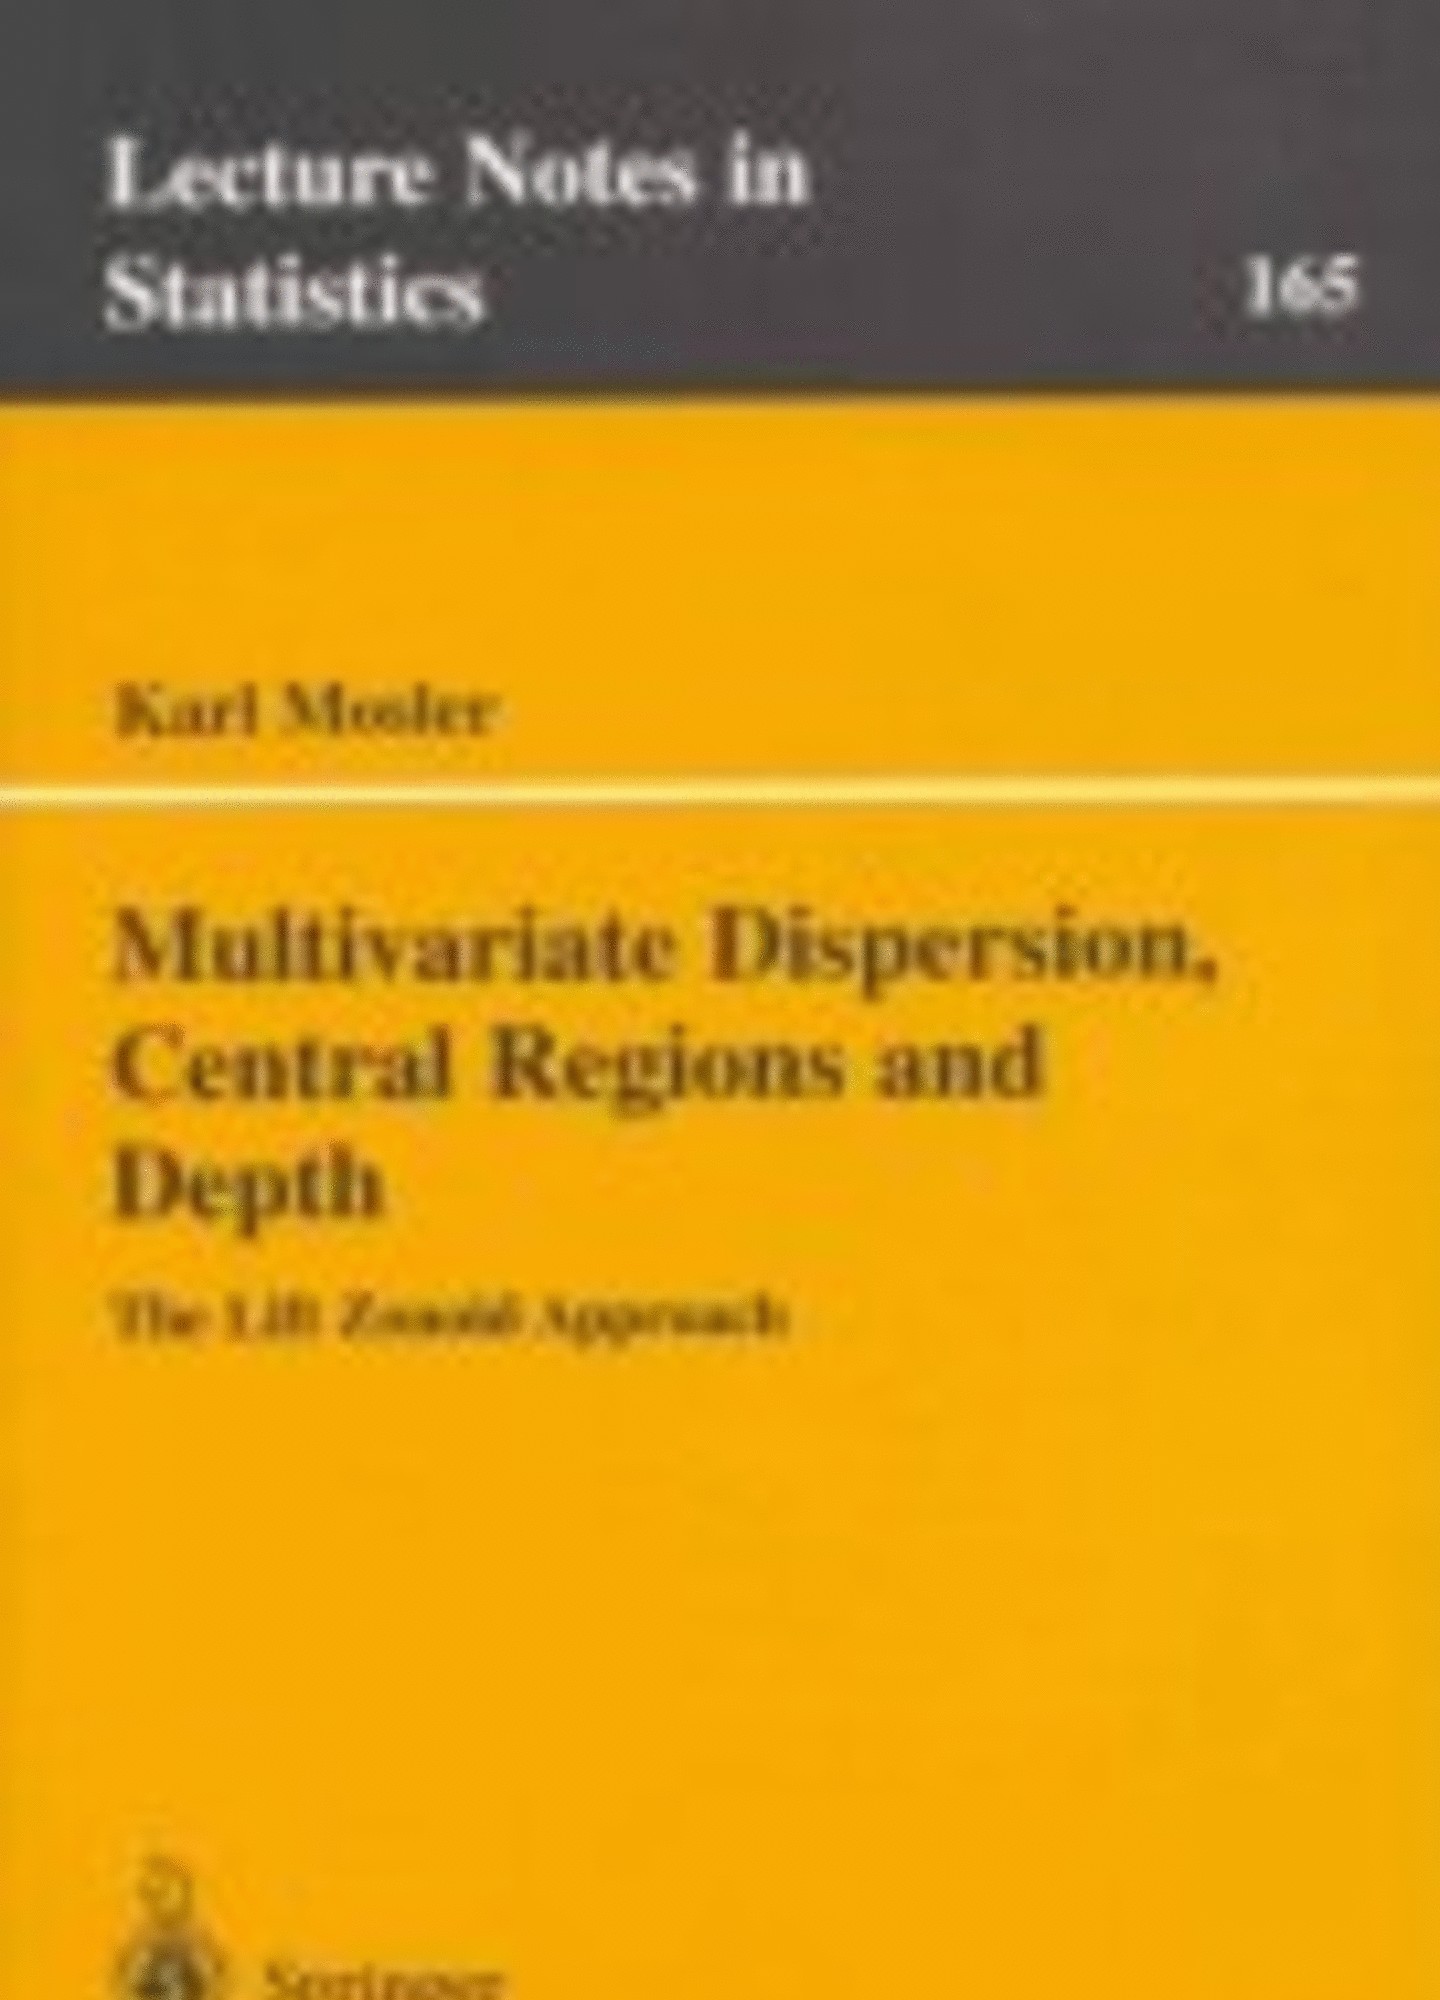 Multivariat Dispersion, Central Regions and Depth